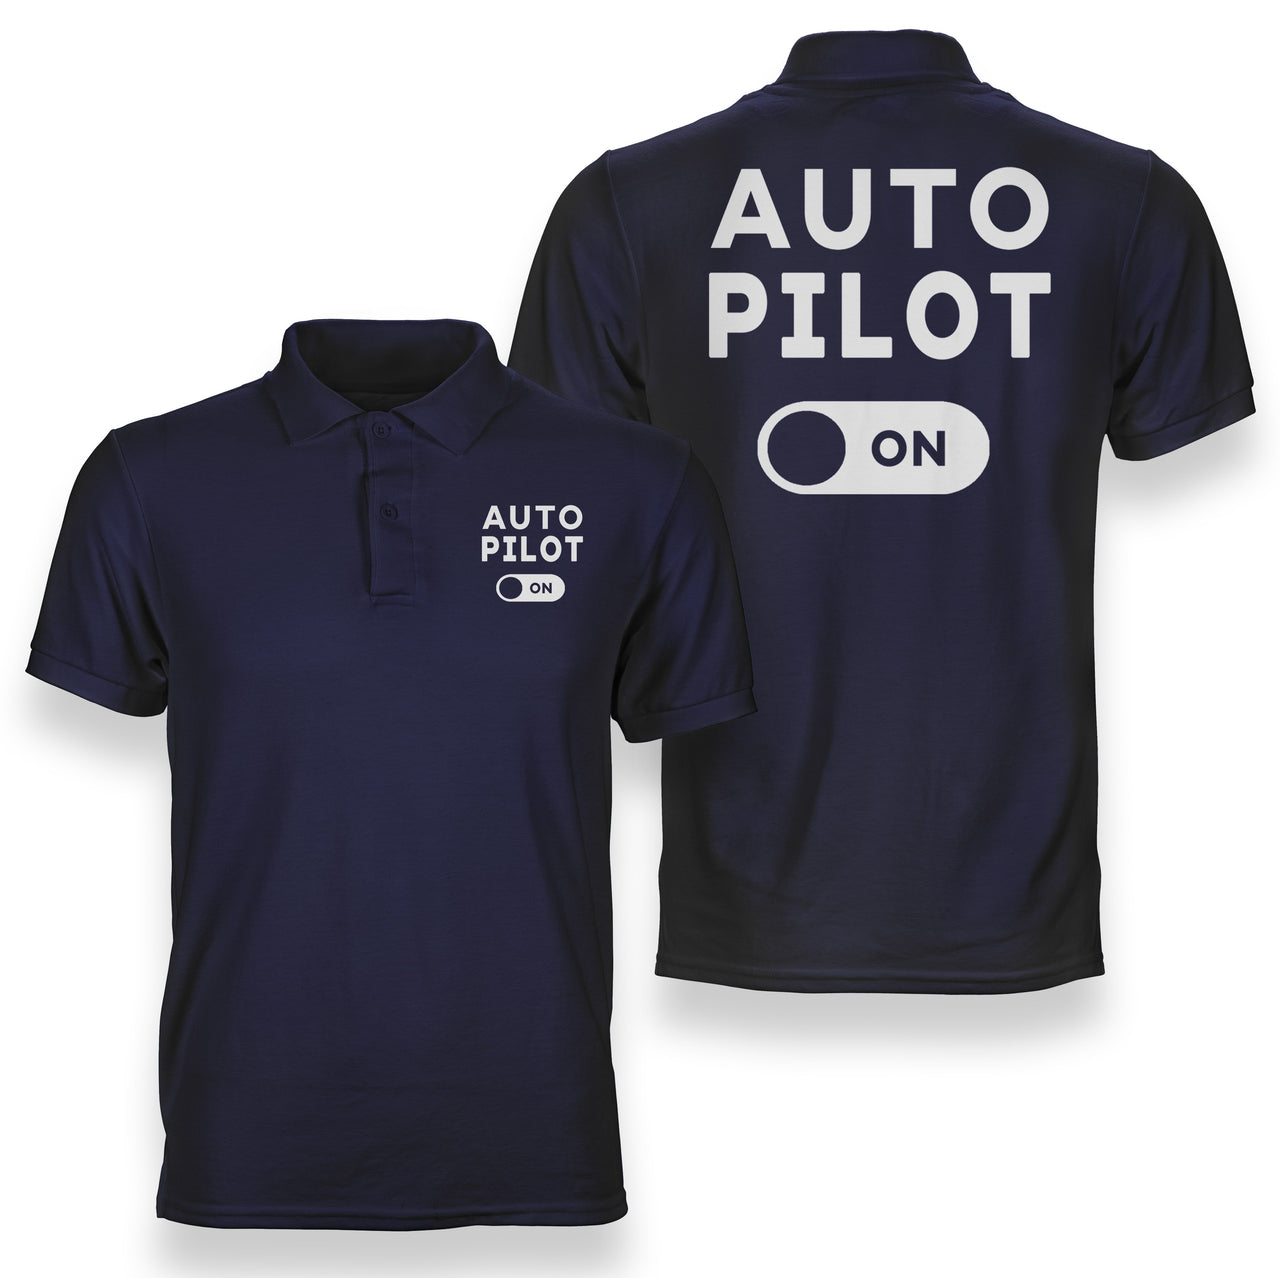 Auto Pilot ON Designed Double Side Polo T-Shirts